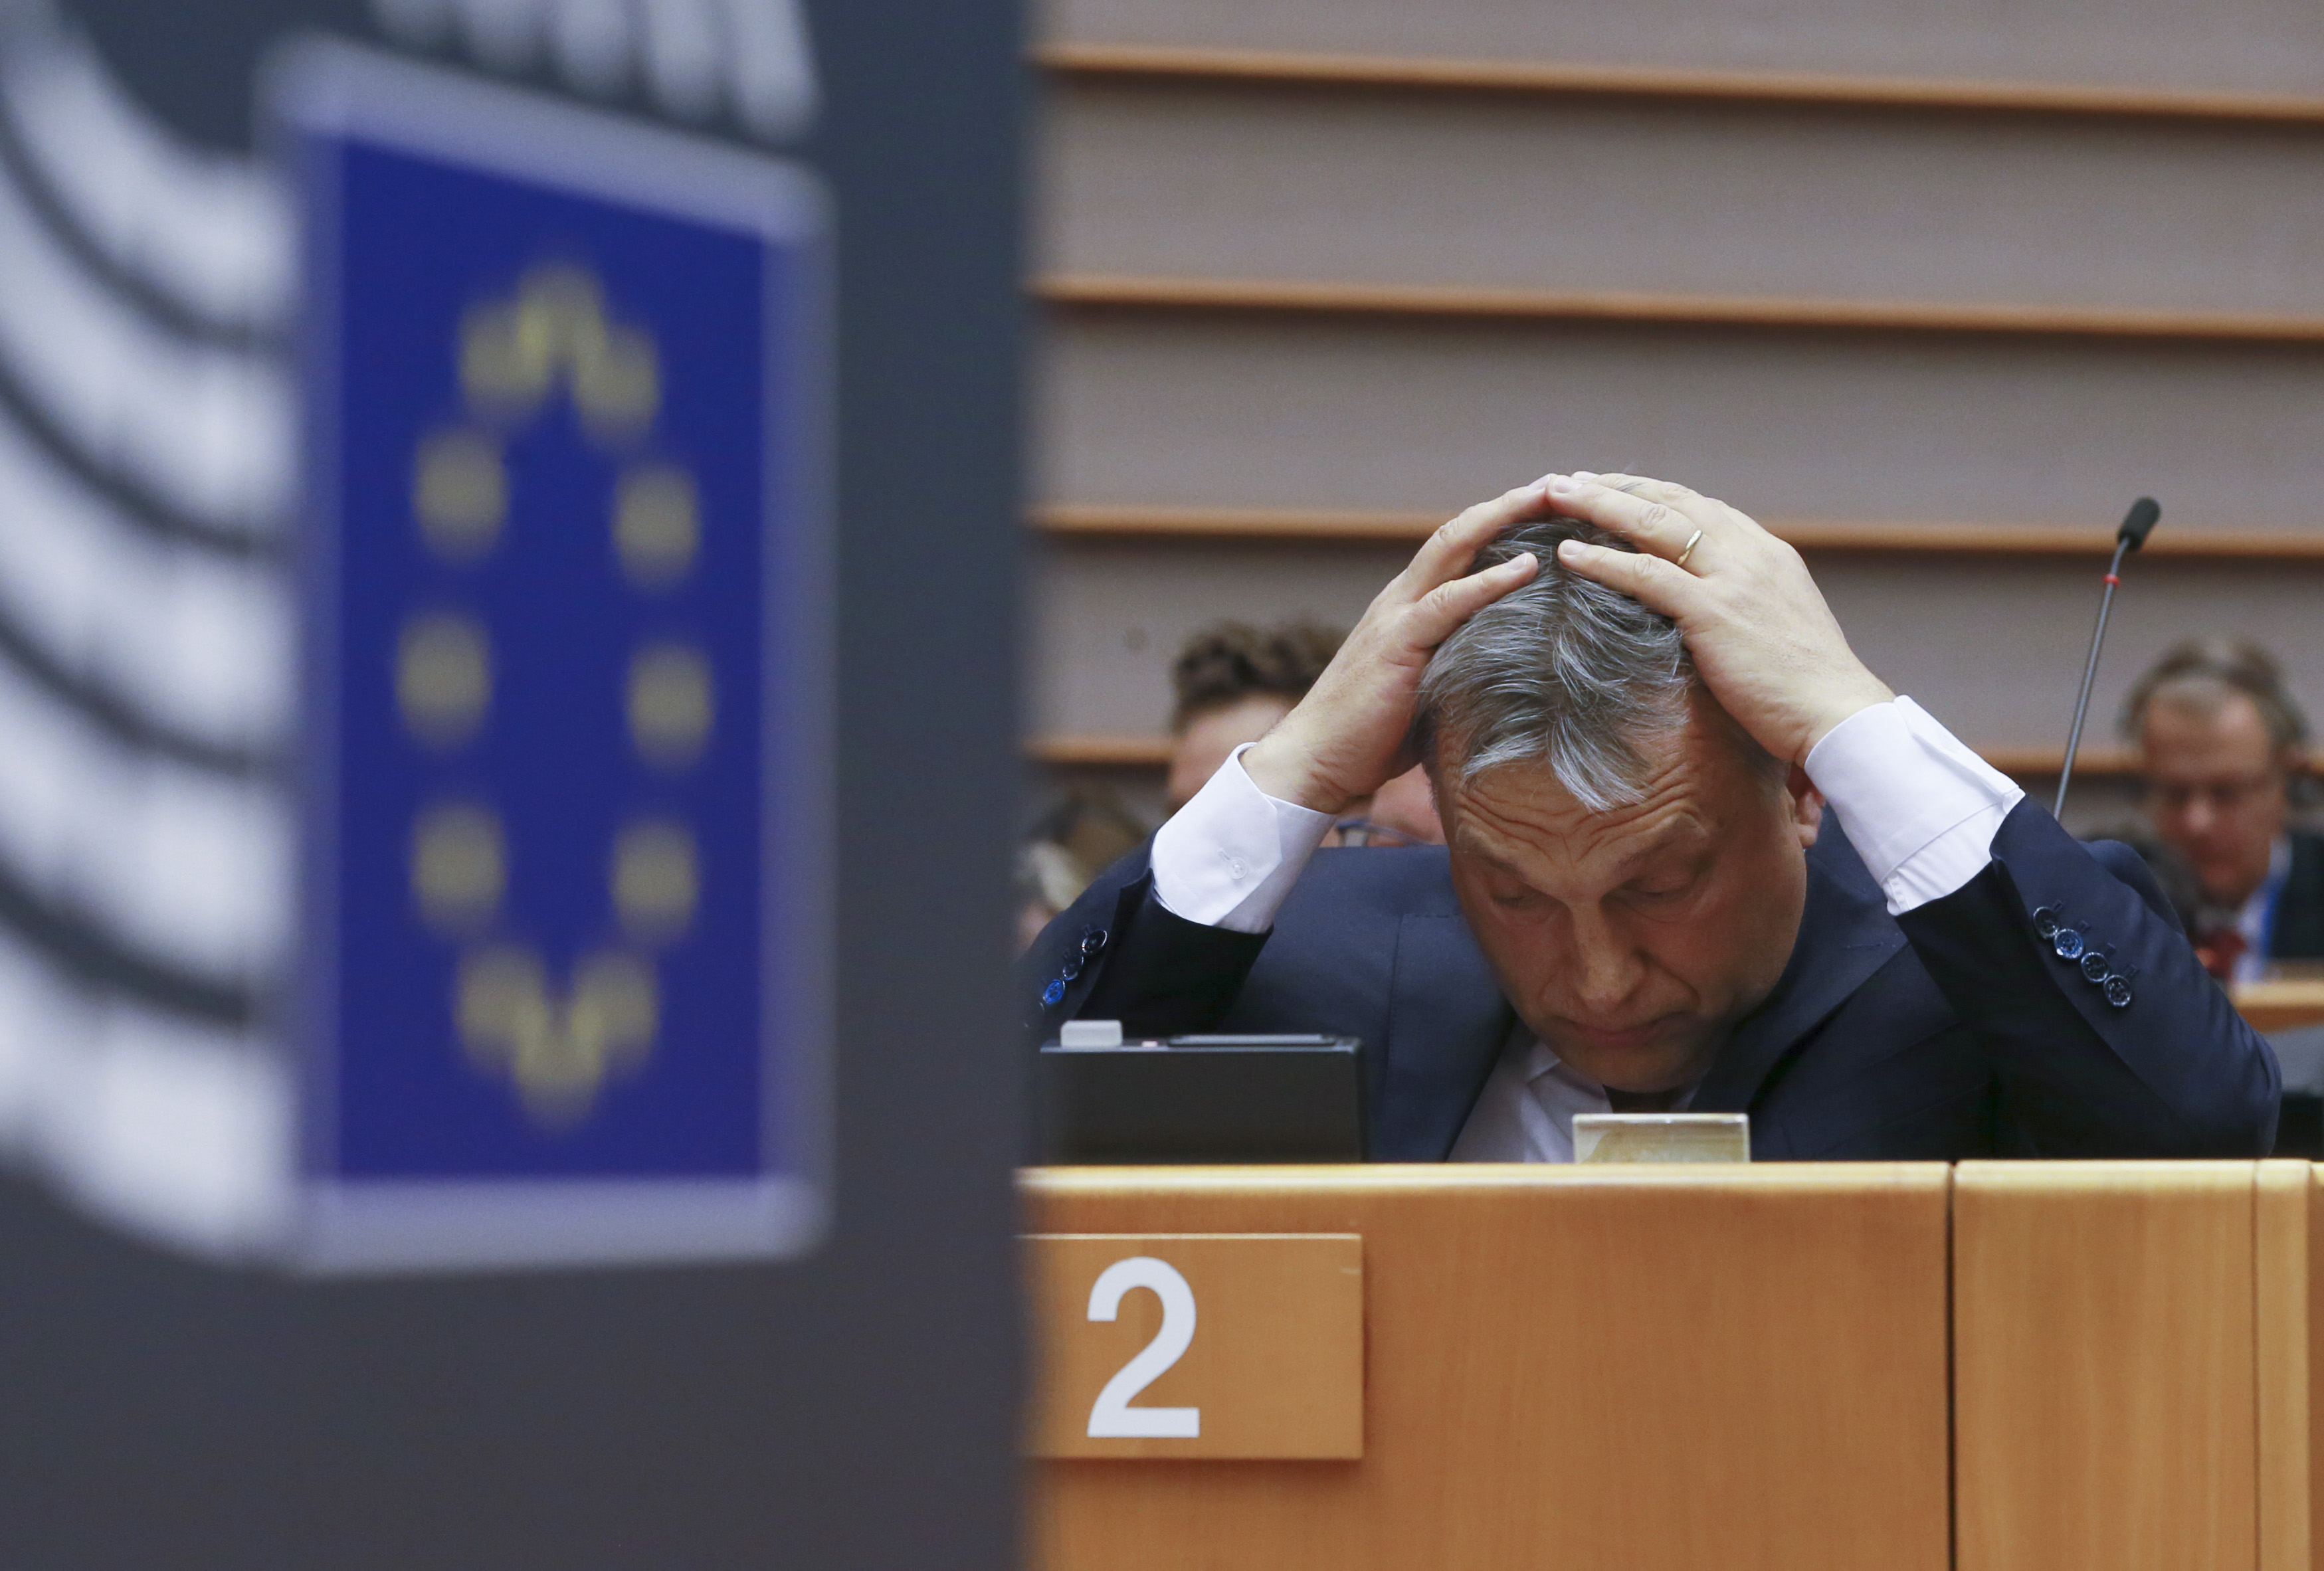 Hungarian Prime Minister Viktor Orban at plenary session of the European parliament